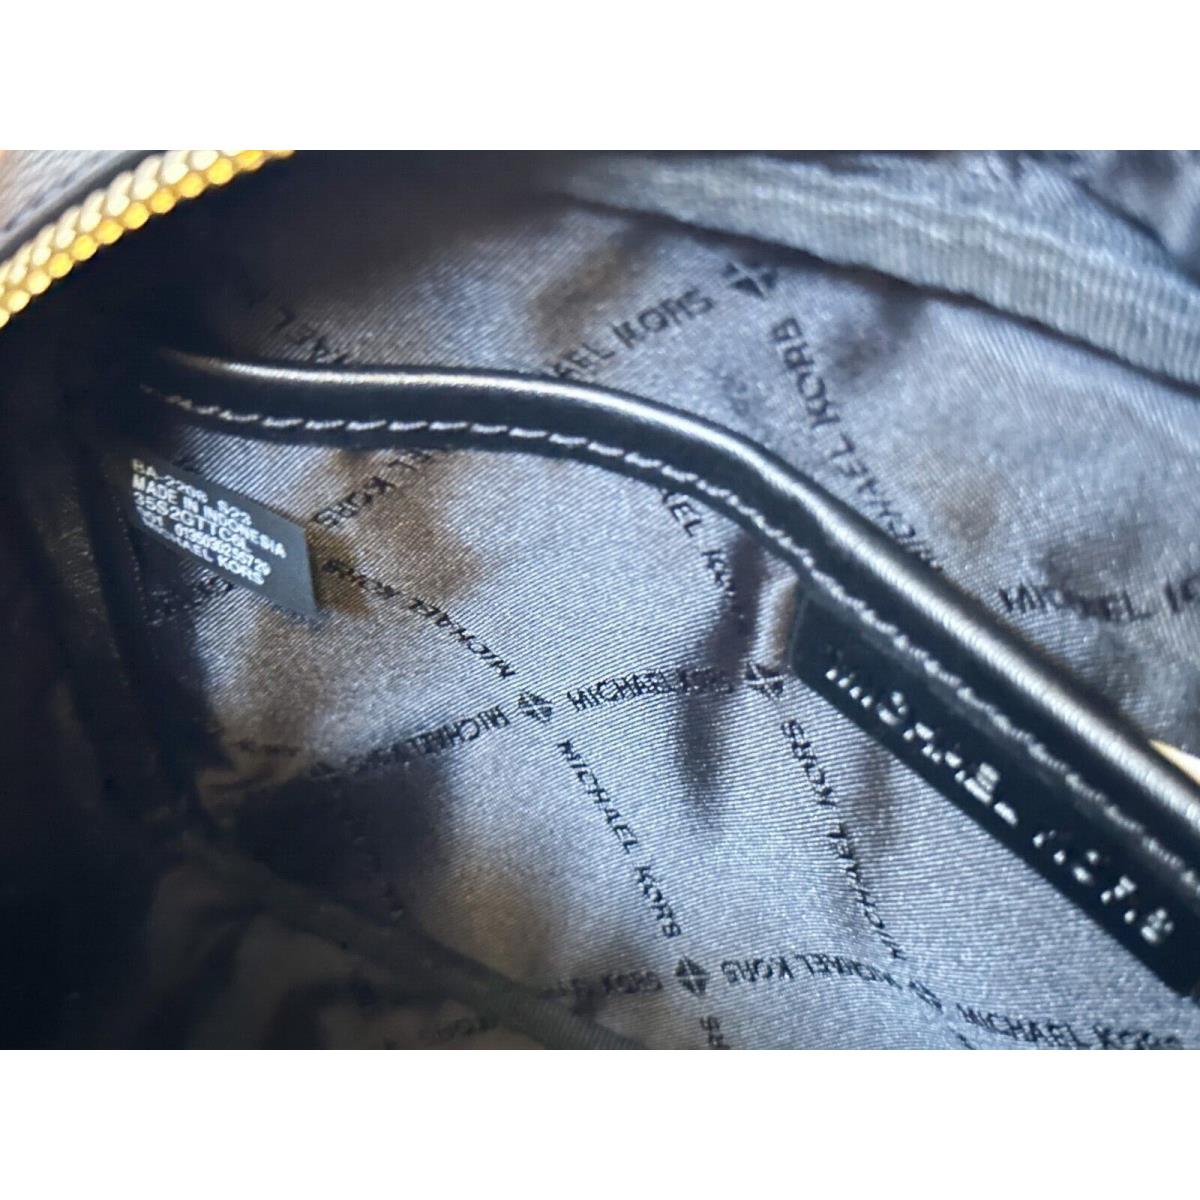 Michael Kors Jet Set Travel Small Shoulder Crossbody Bag with Tech Attach  Var BROWN/BLACK - Michael Kors bag 